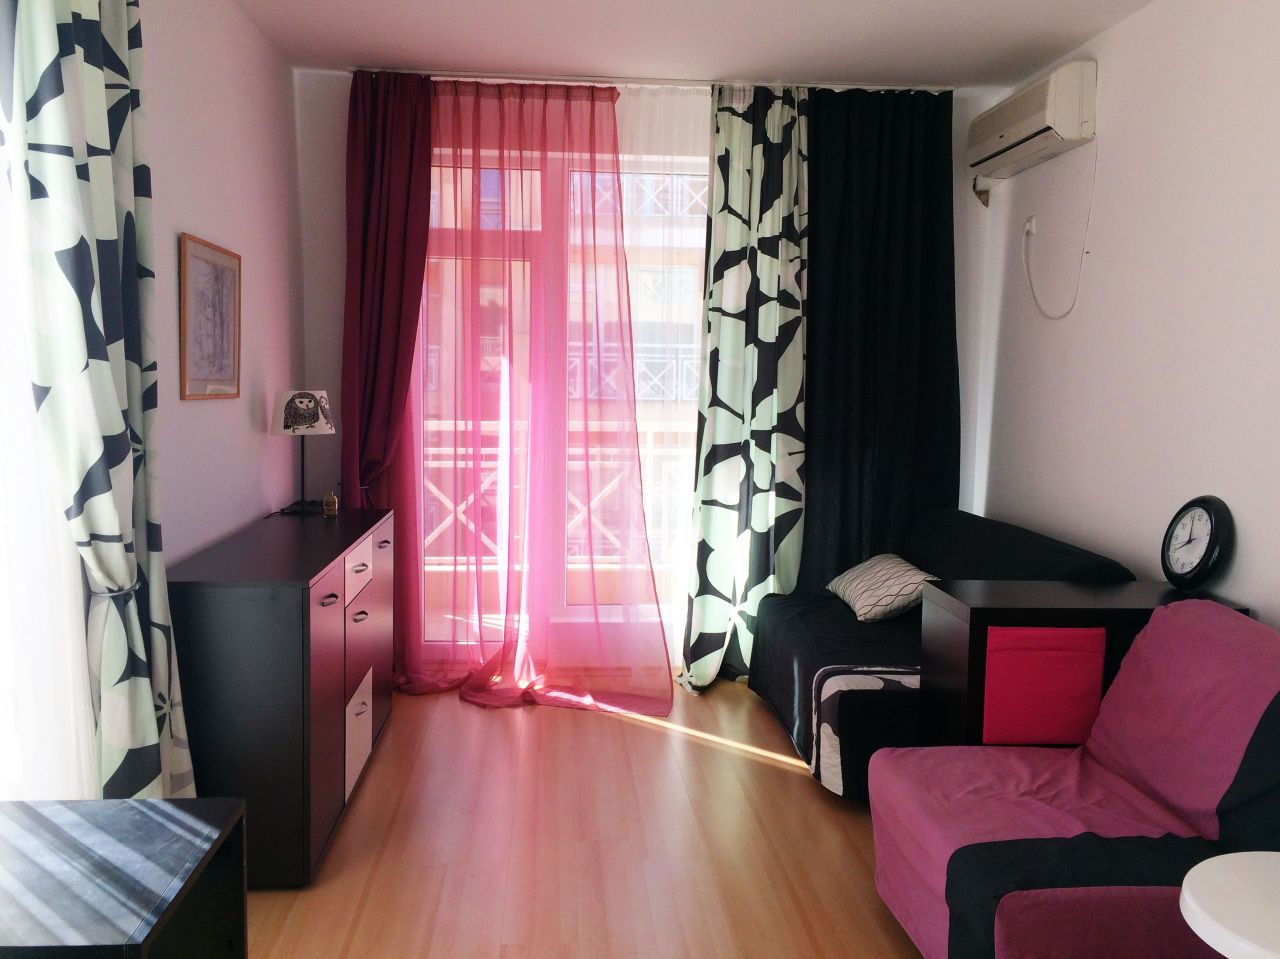 Квартира на Солнечном берегу, Болгария, 31 м2 - фото 1